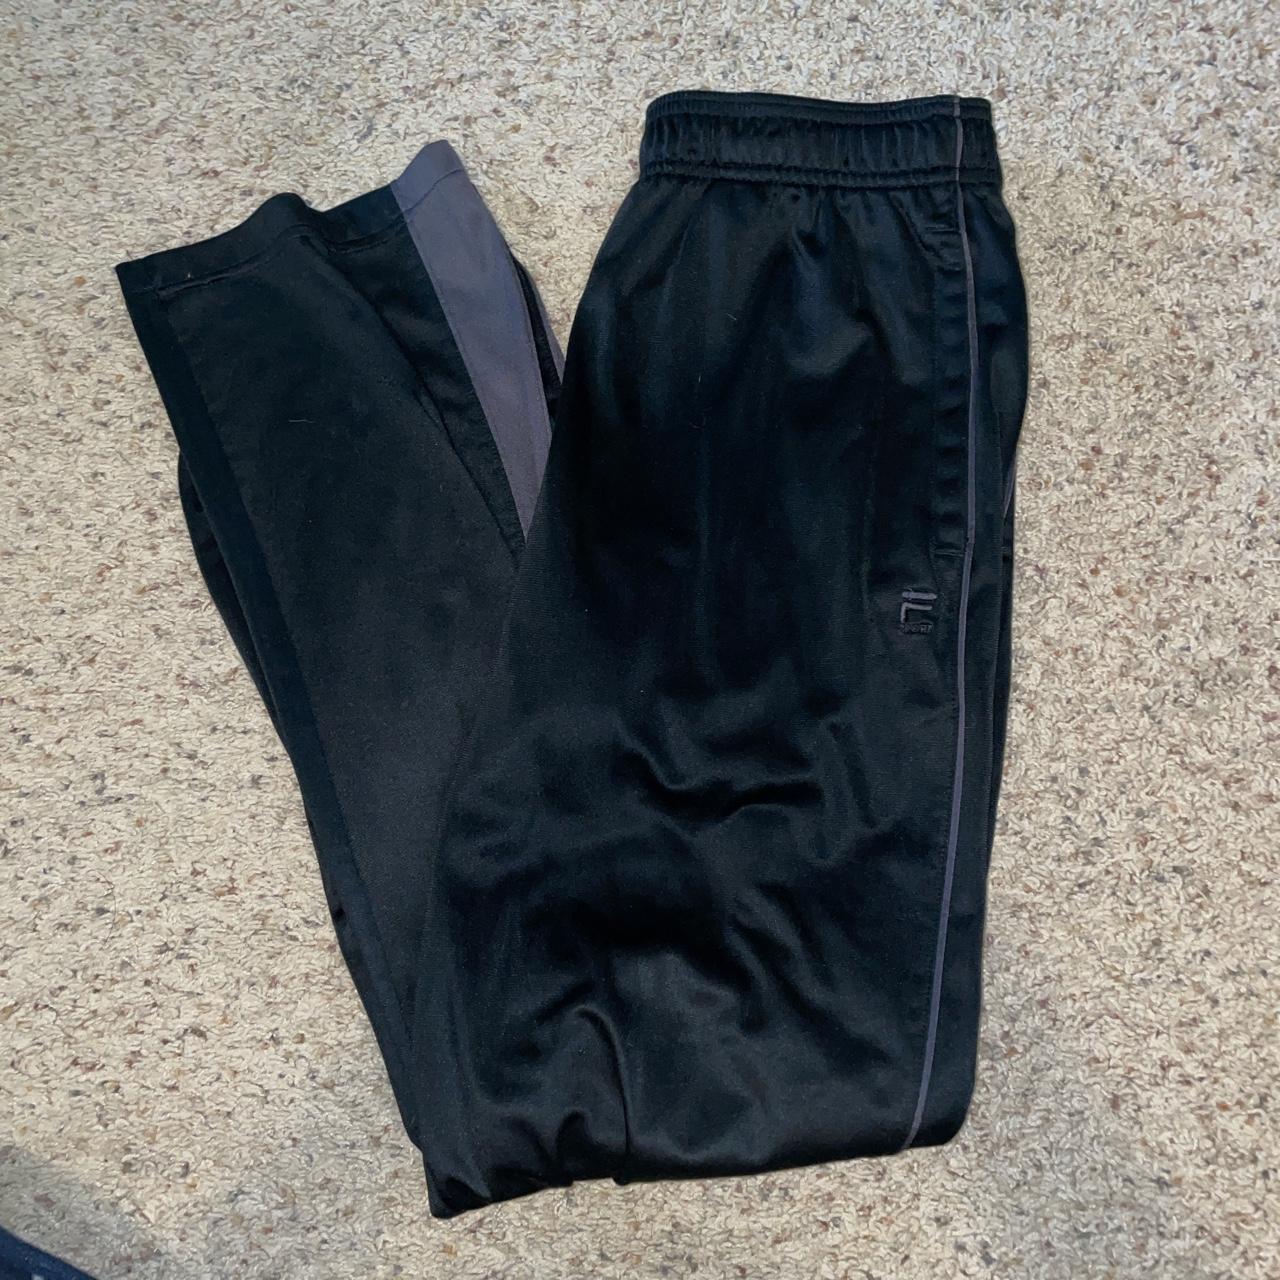 Fila Sport Sweatpants. Size medium, has a burn hole